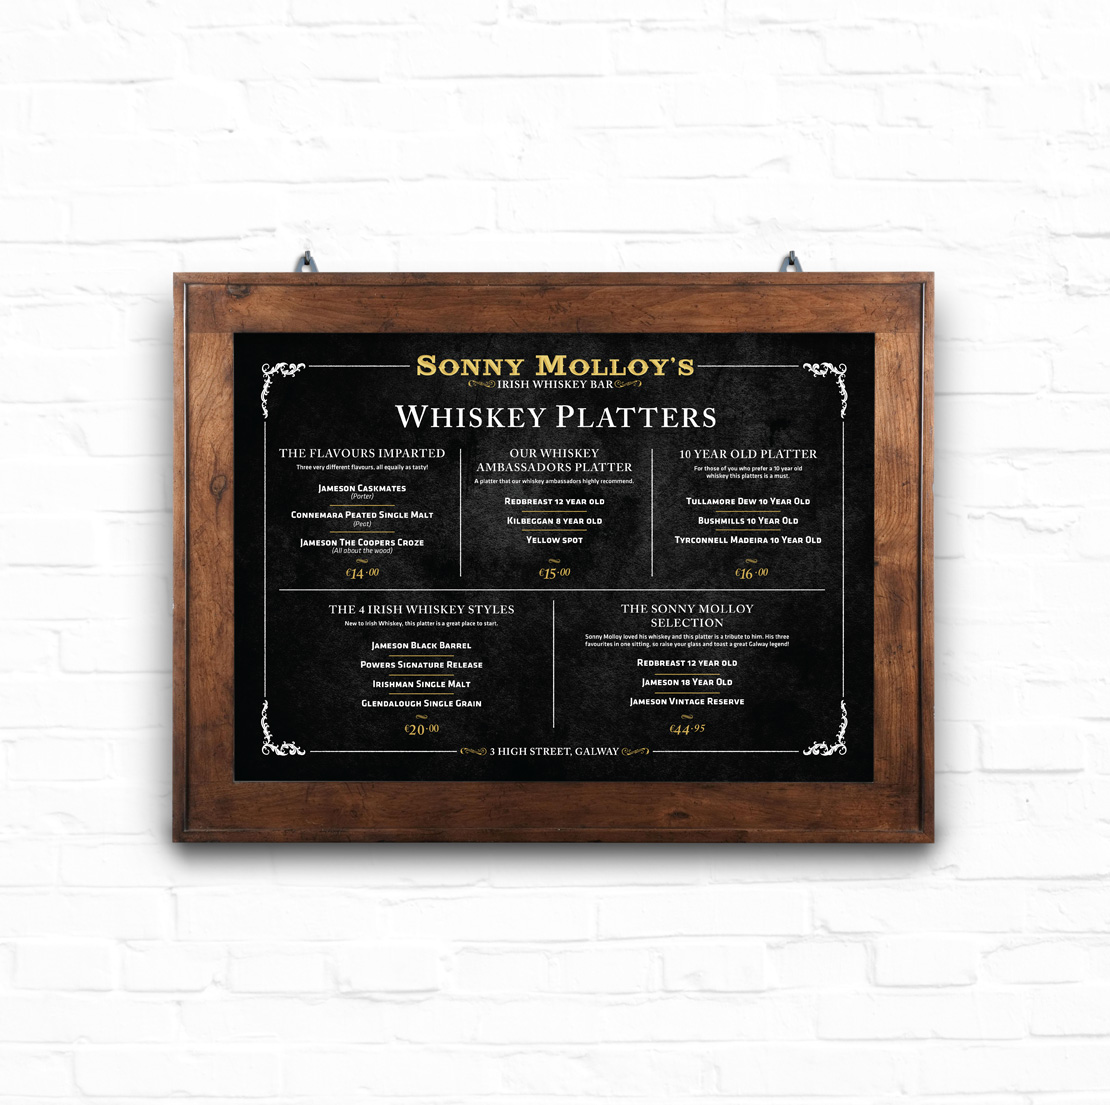 Sonny Molloy’s whiskey platter menu design for bar wall